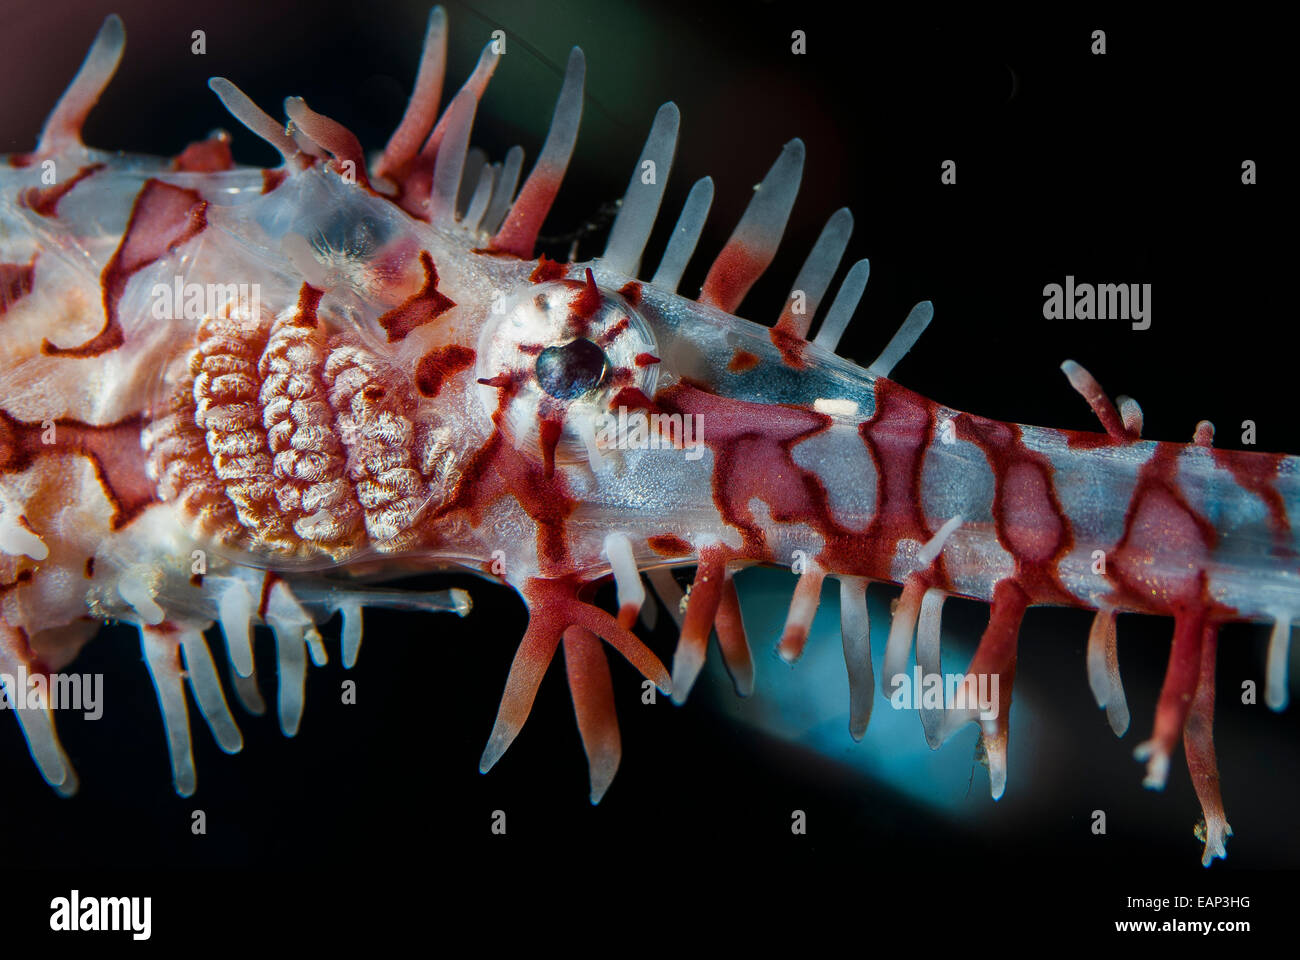 Hrlequim ghost pipefish - Solenostomus paradoxus - Moalboal - Cebu - Philippines Stock Photo